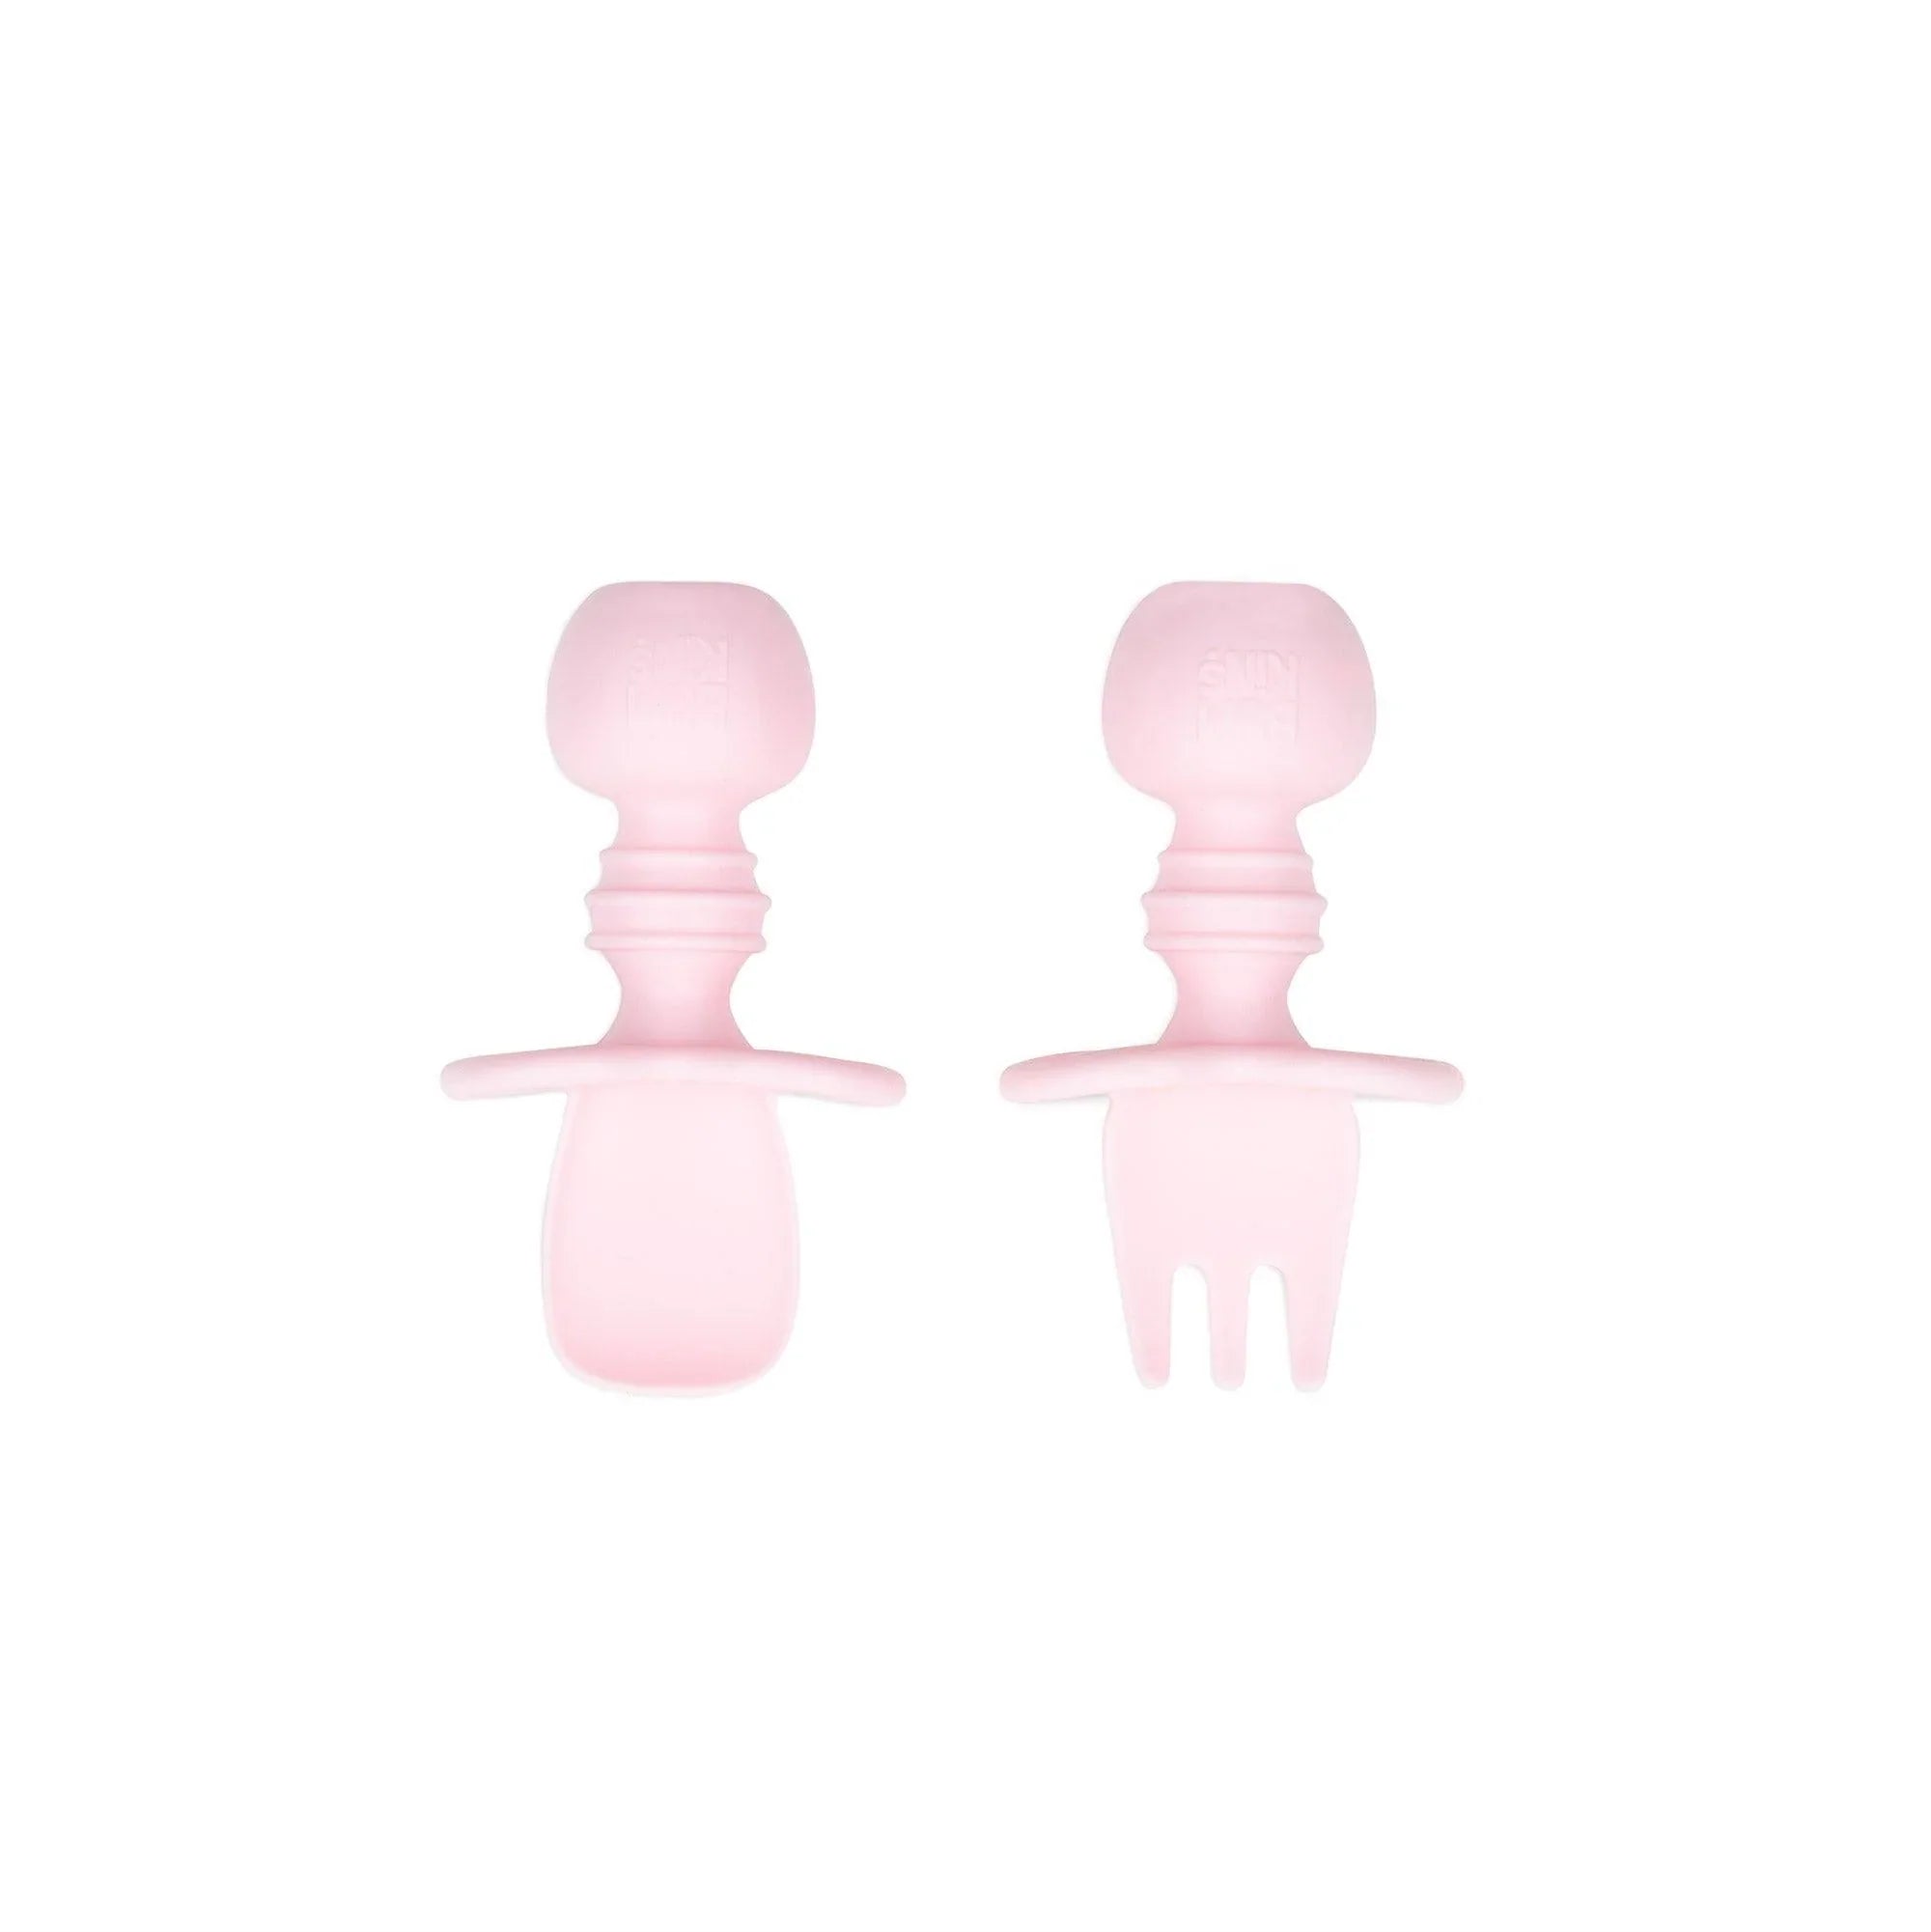 Silicone Chewtensils®: Pink - Bumkins